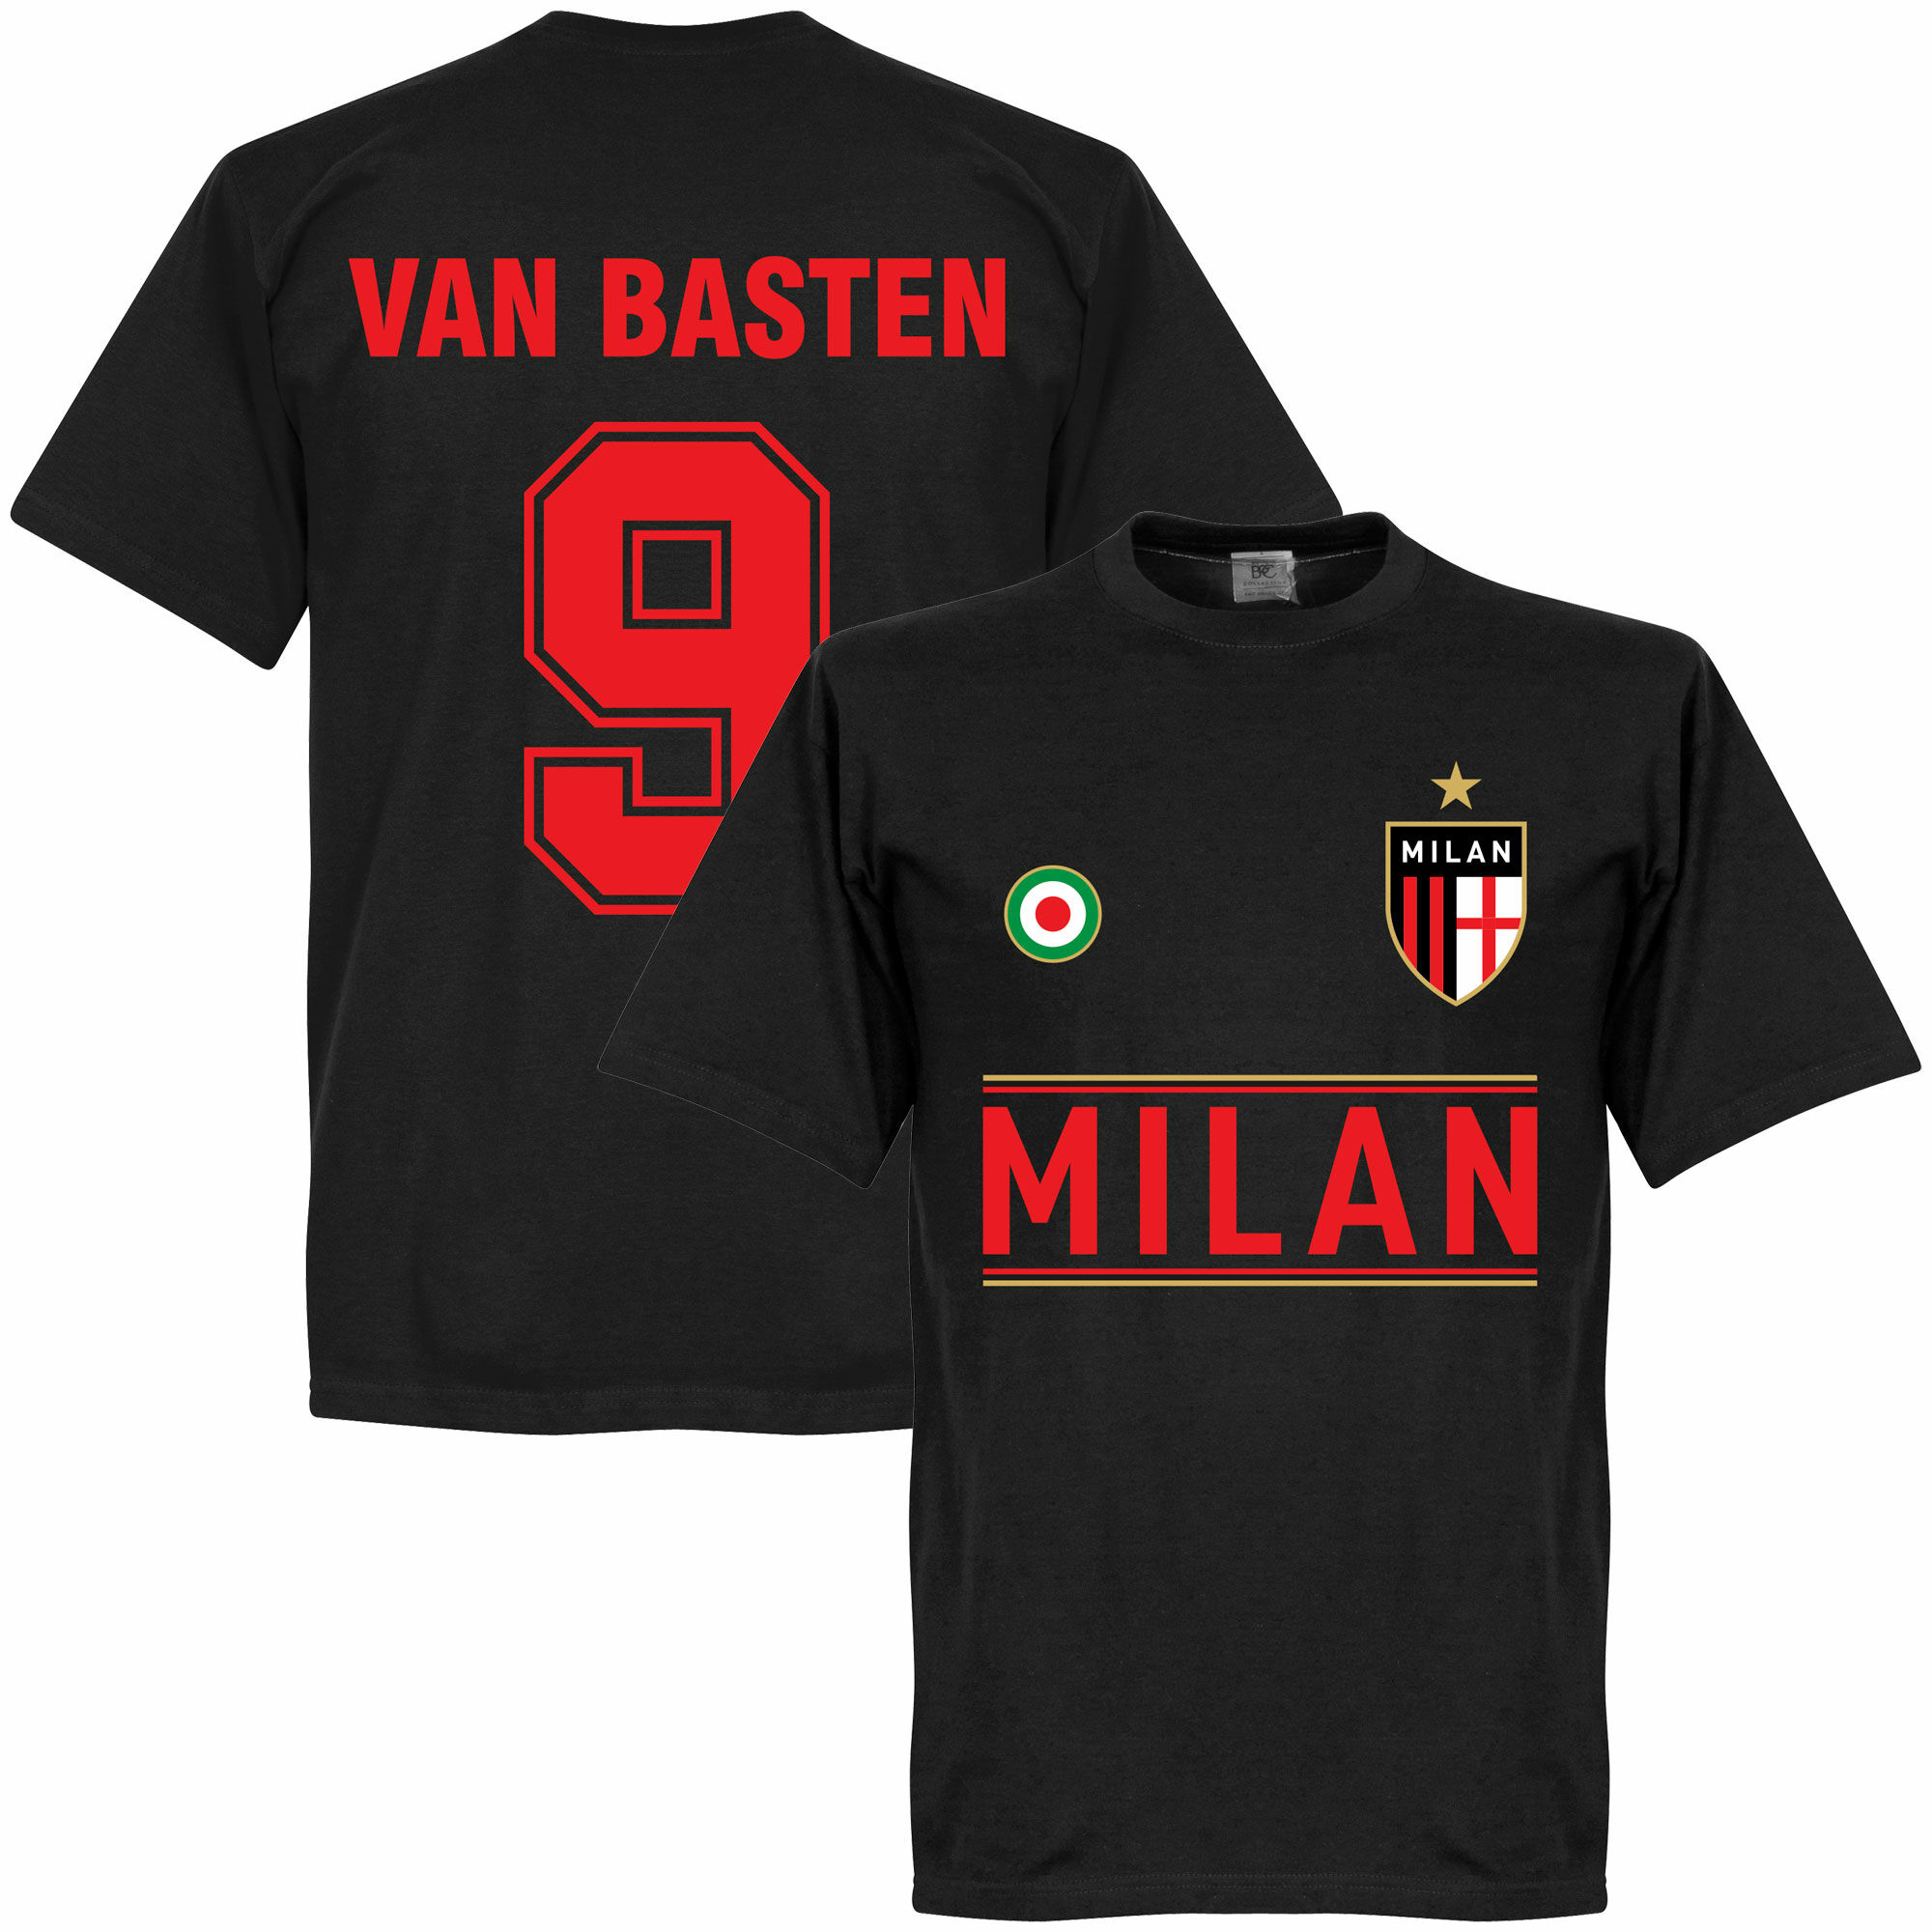 AC Milán - Tričko - Marco van Basten, číslo 9, černé